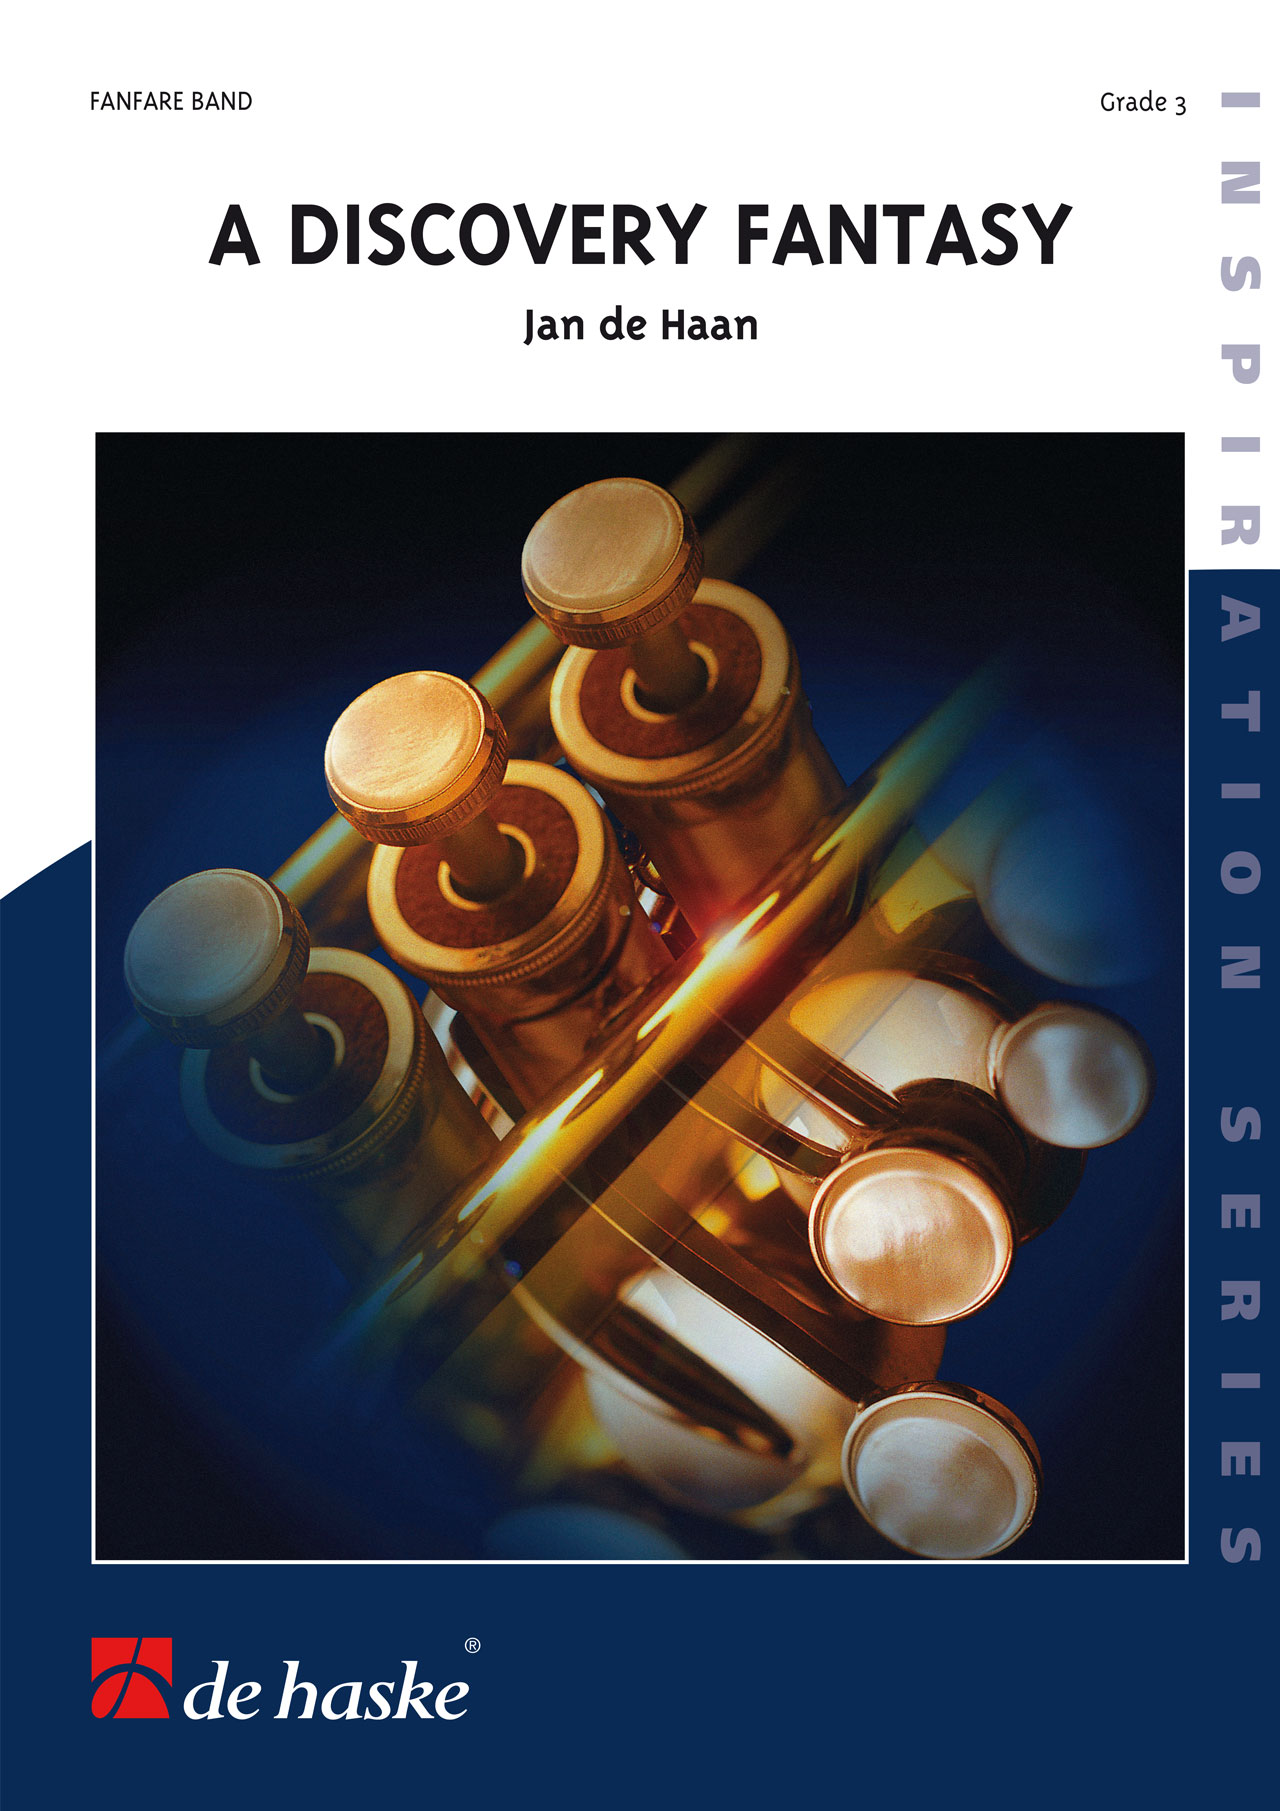 Jan de Haan: A Discovery Fantasy: Fanfare Band: Score & Parts